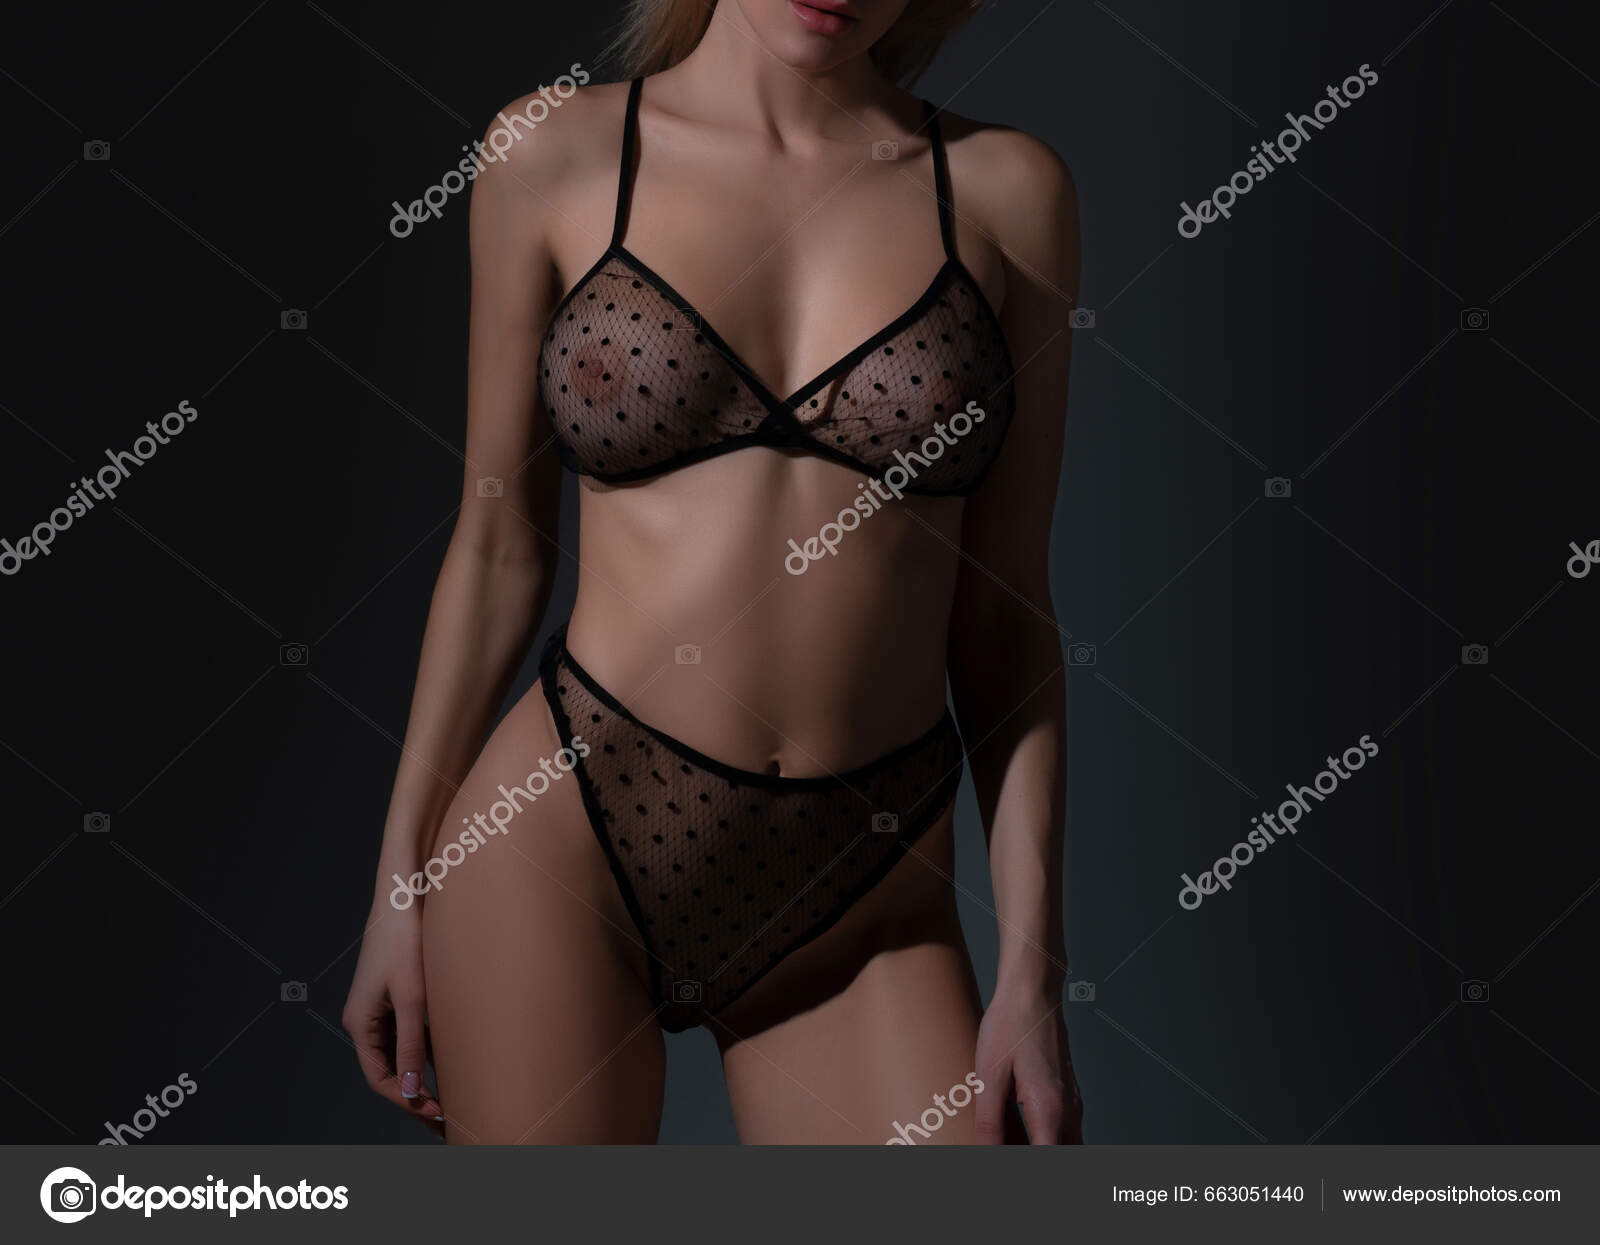 https://st5.depositphotos.com/3584053/66305/i/1600/depositphotos_663051440-stock-photo-sexy-transparent-lingerie-women-large.jpg